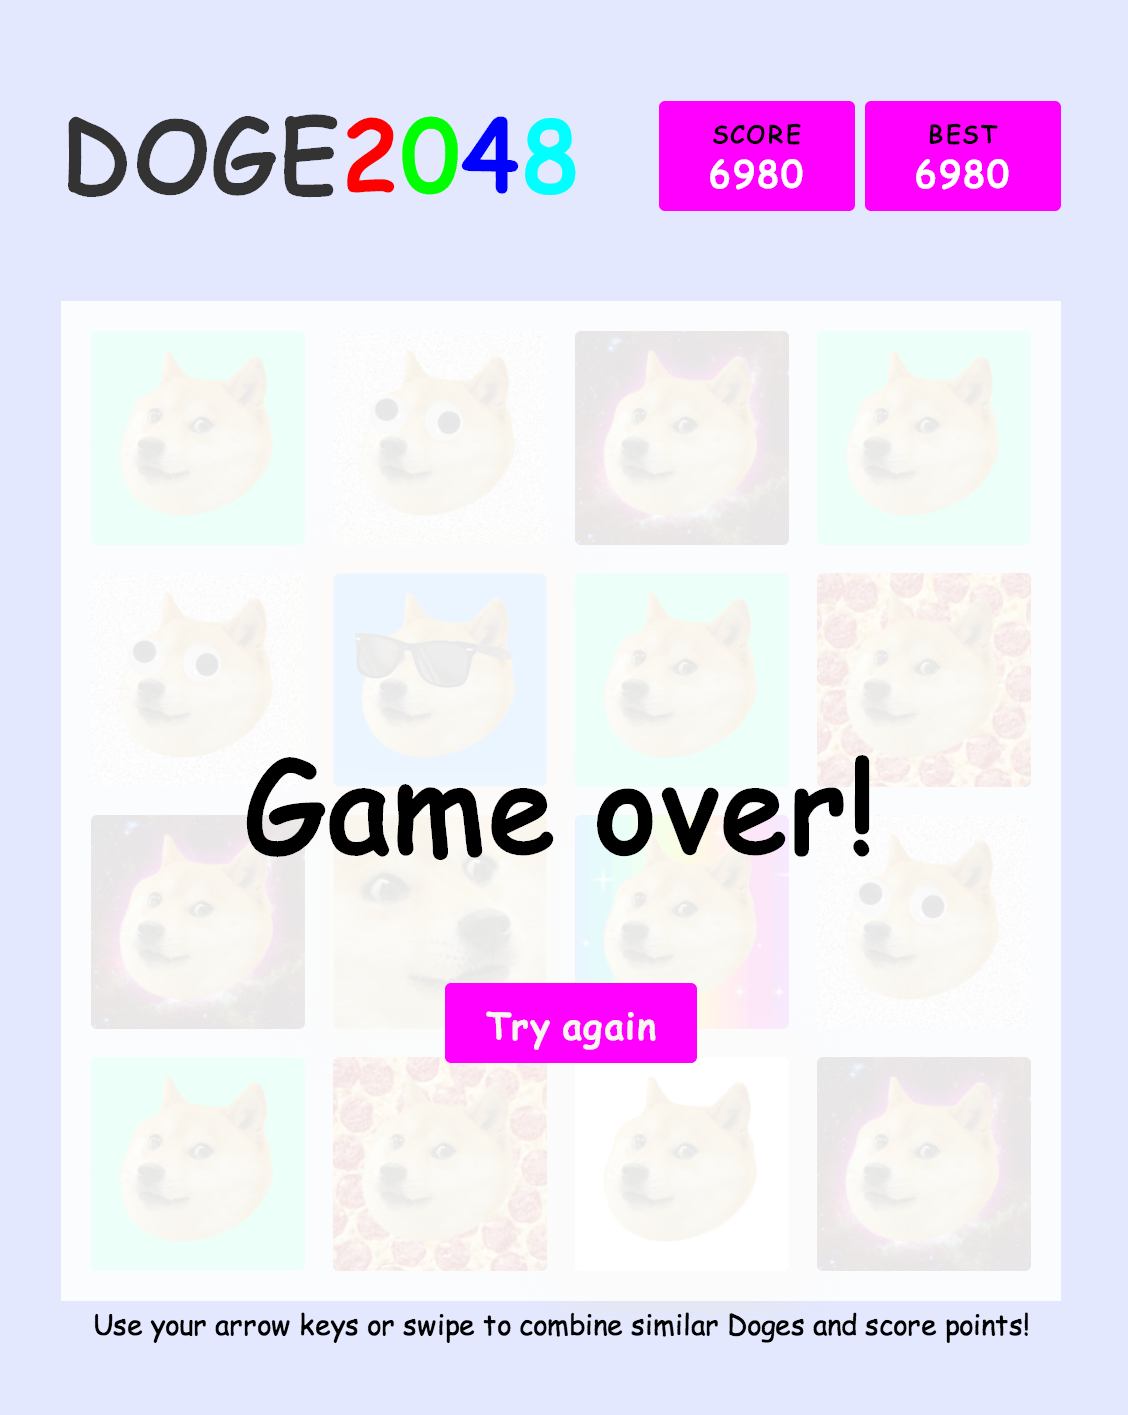 Doge2048 game